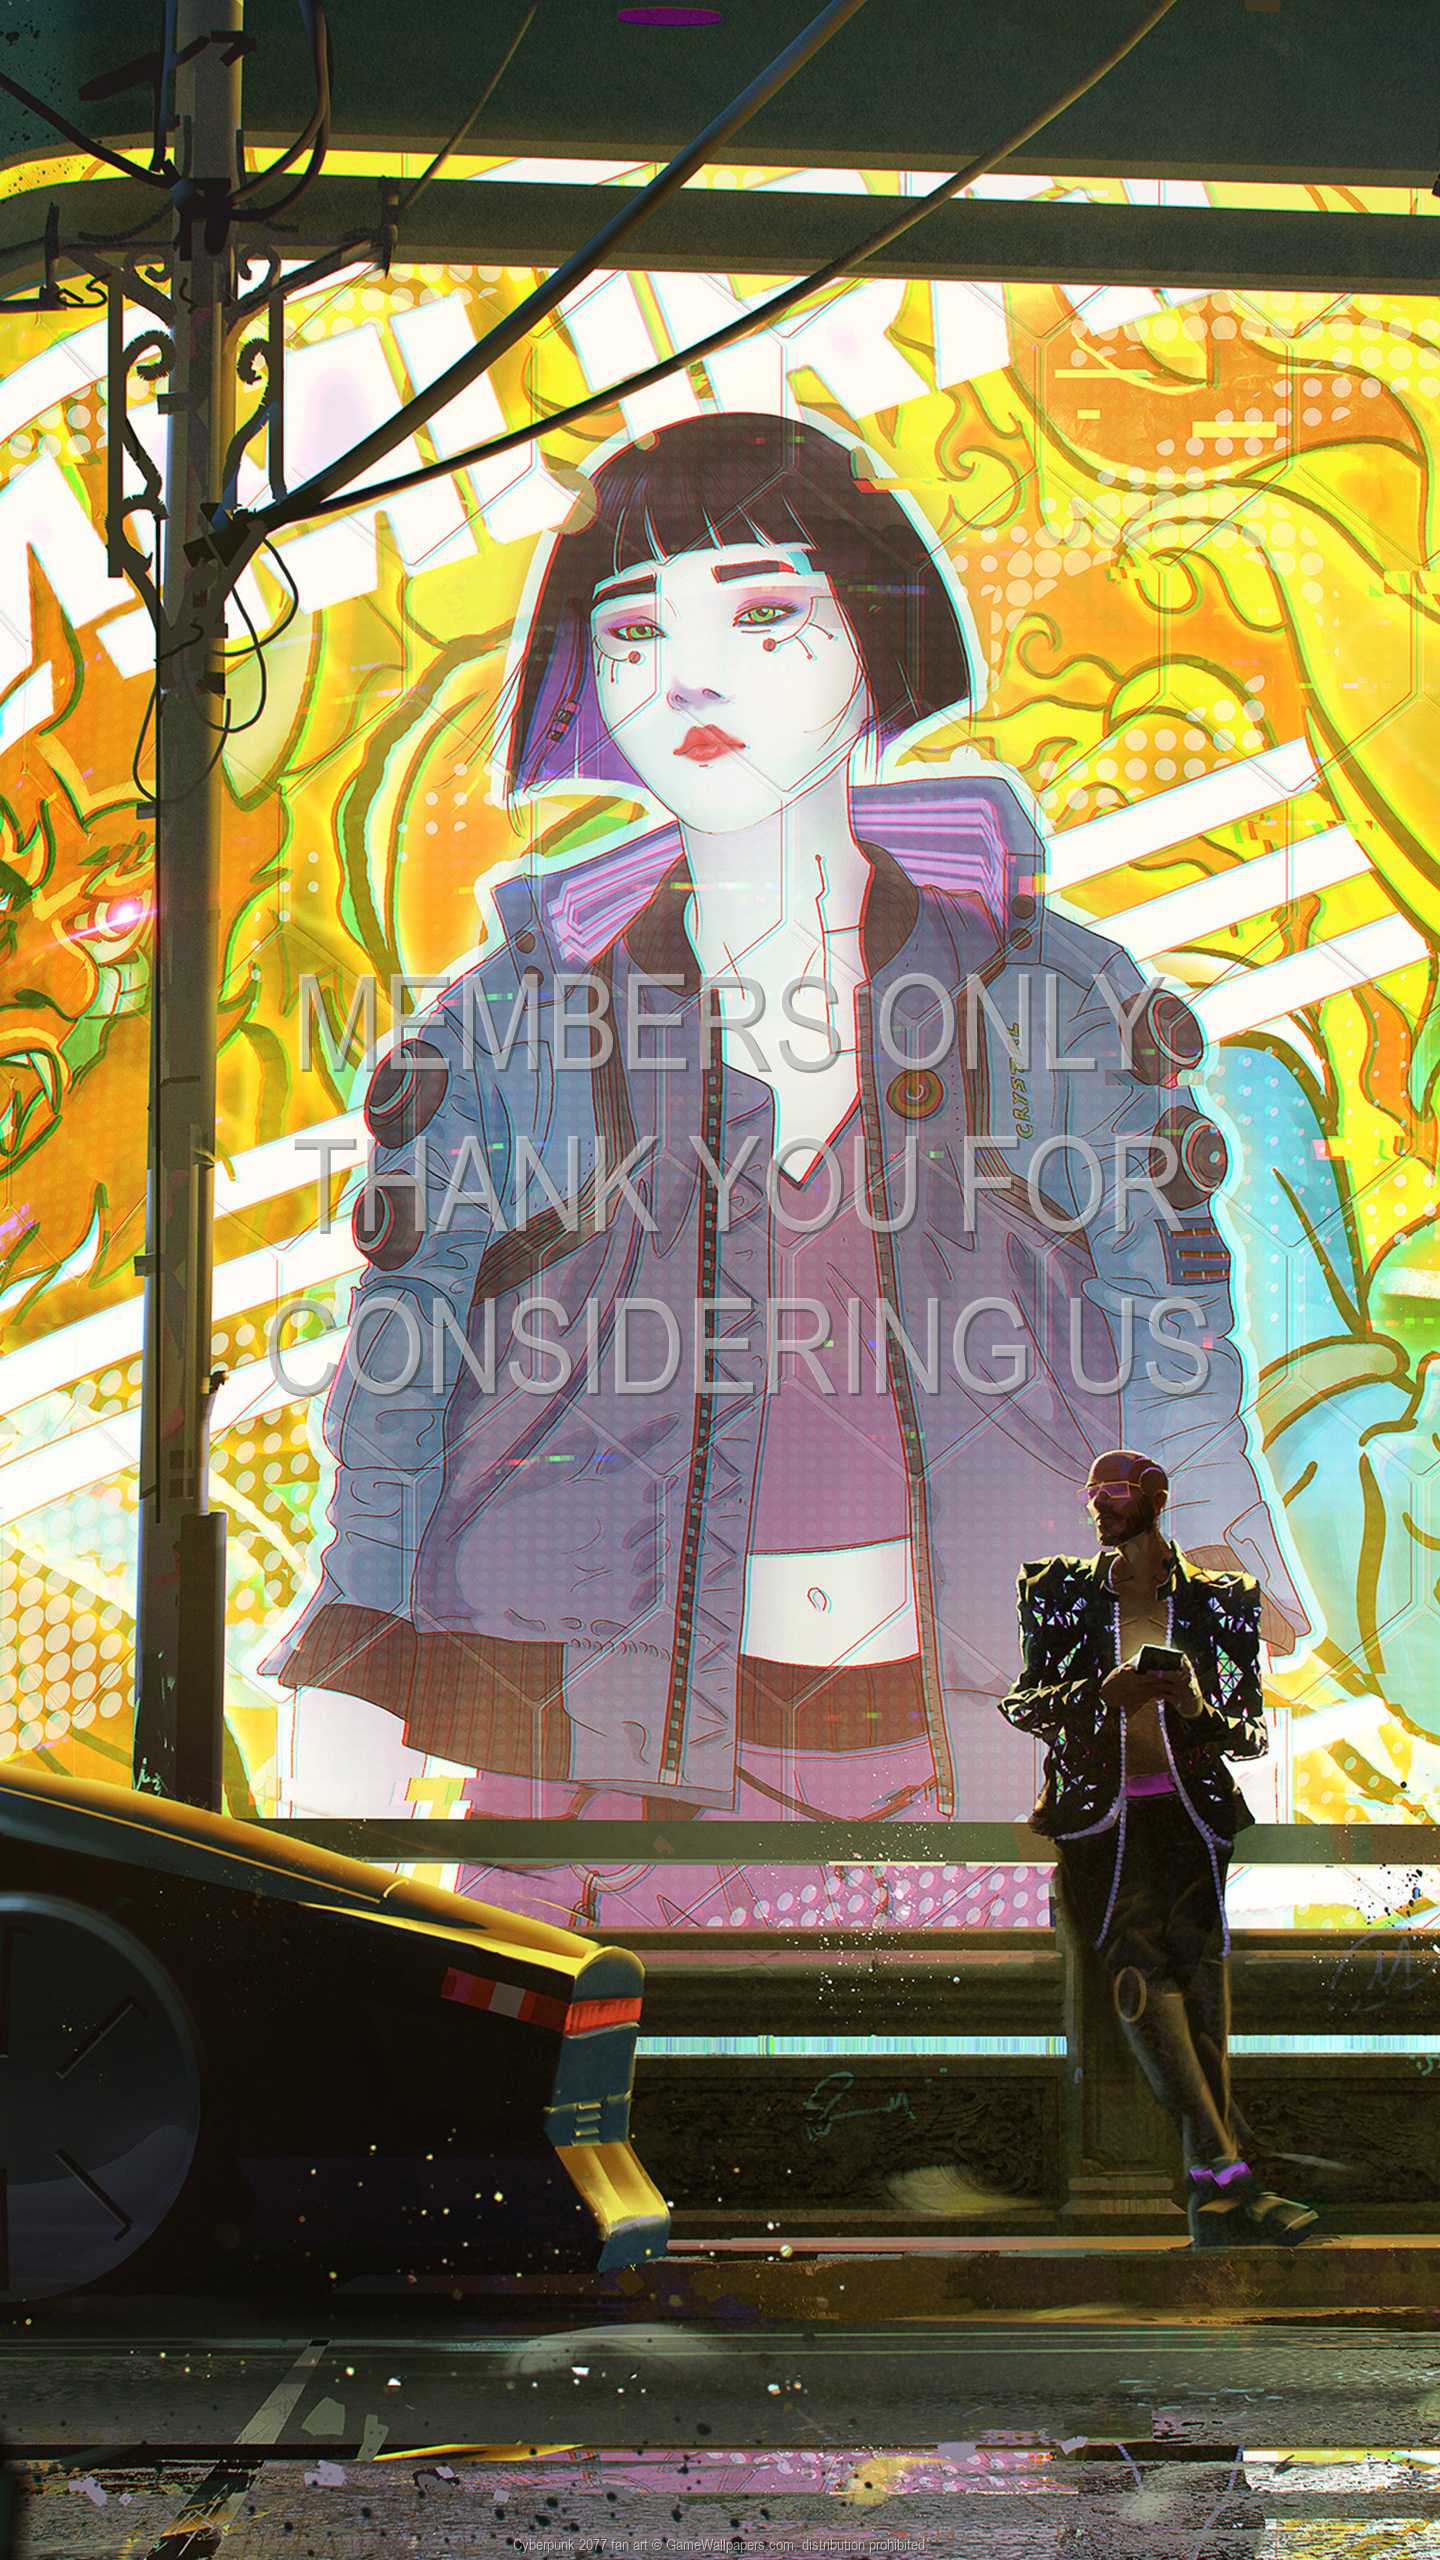 Cyberpunk 2077 fan art 1440p Vertical Mobile wallpaper or background 05